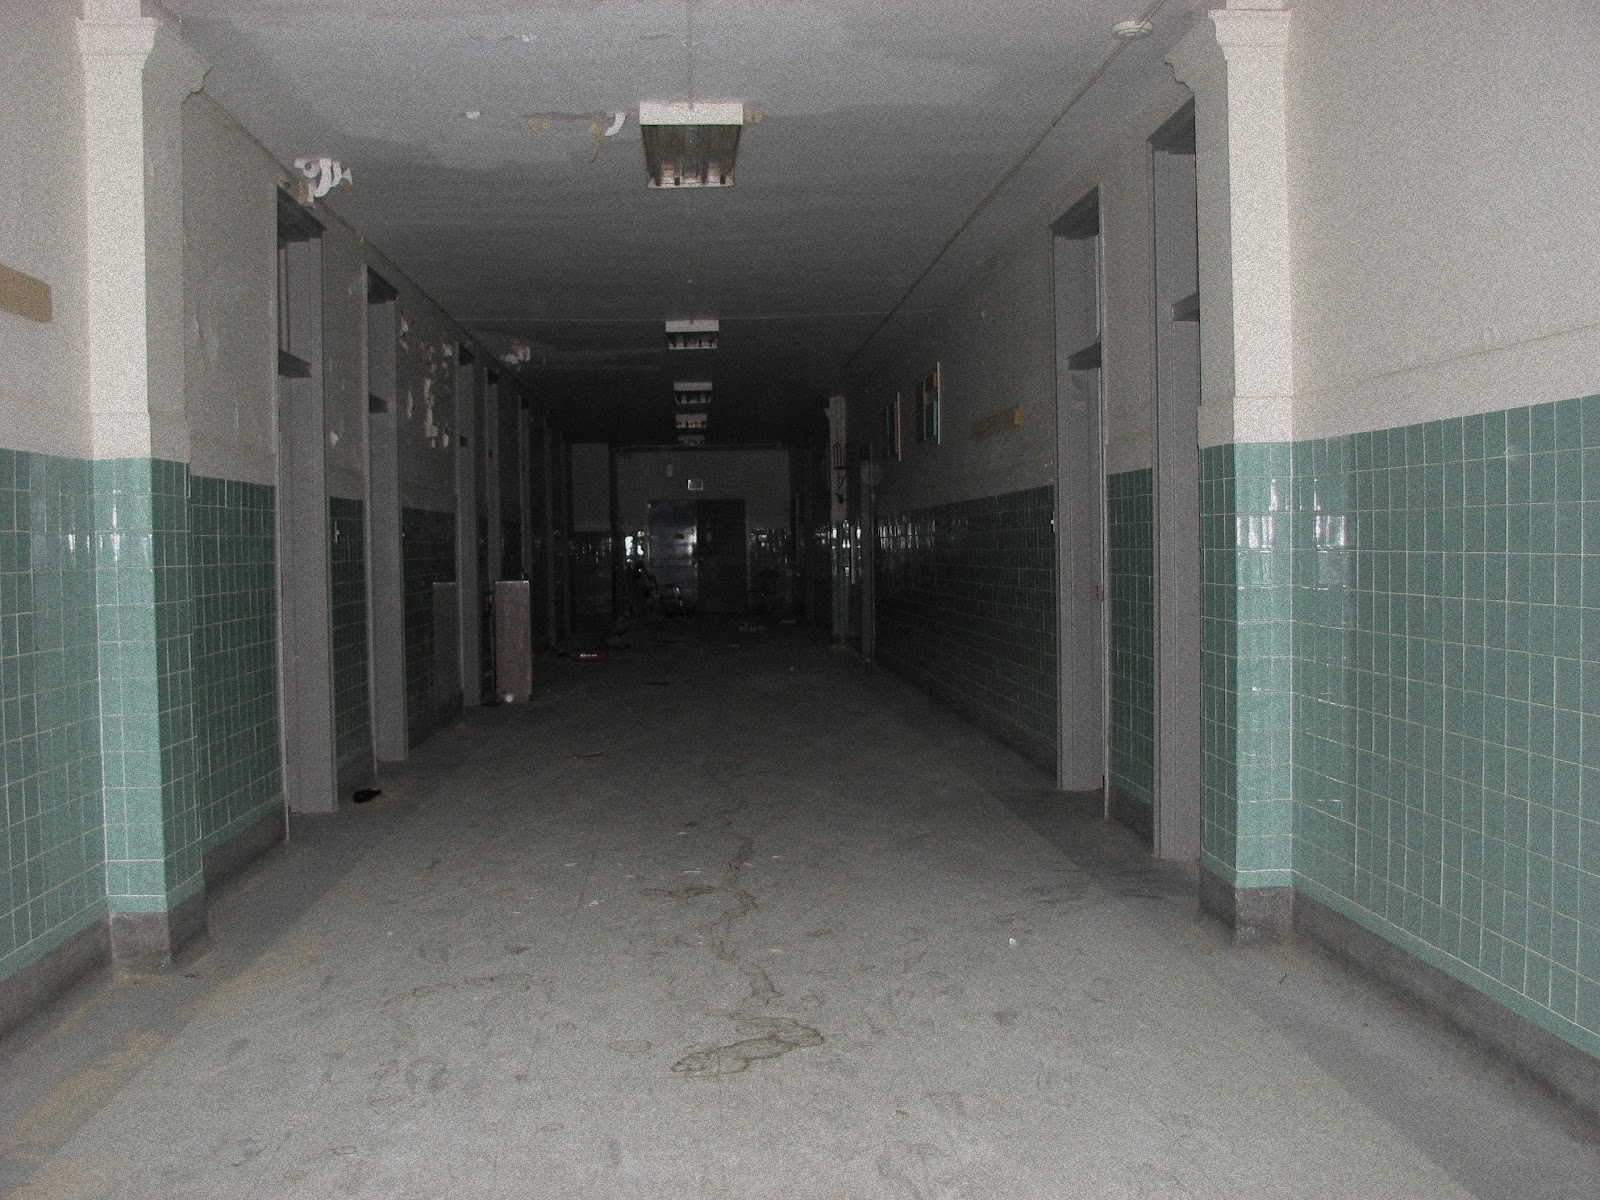 Mental Hospital Room